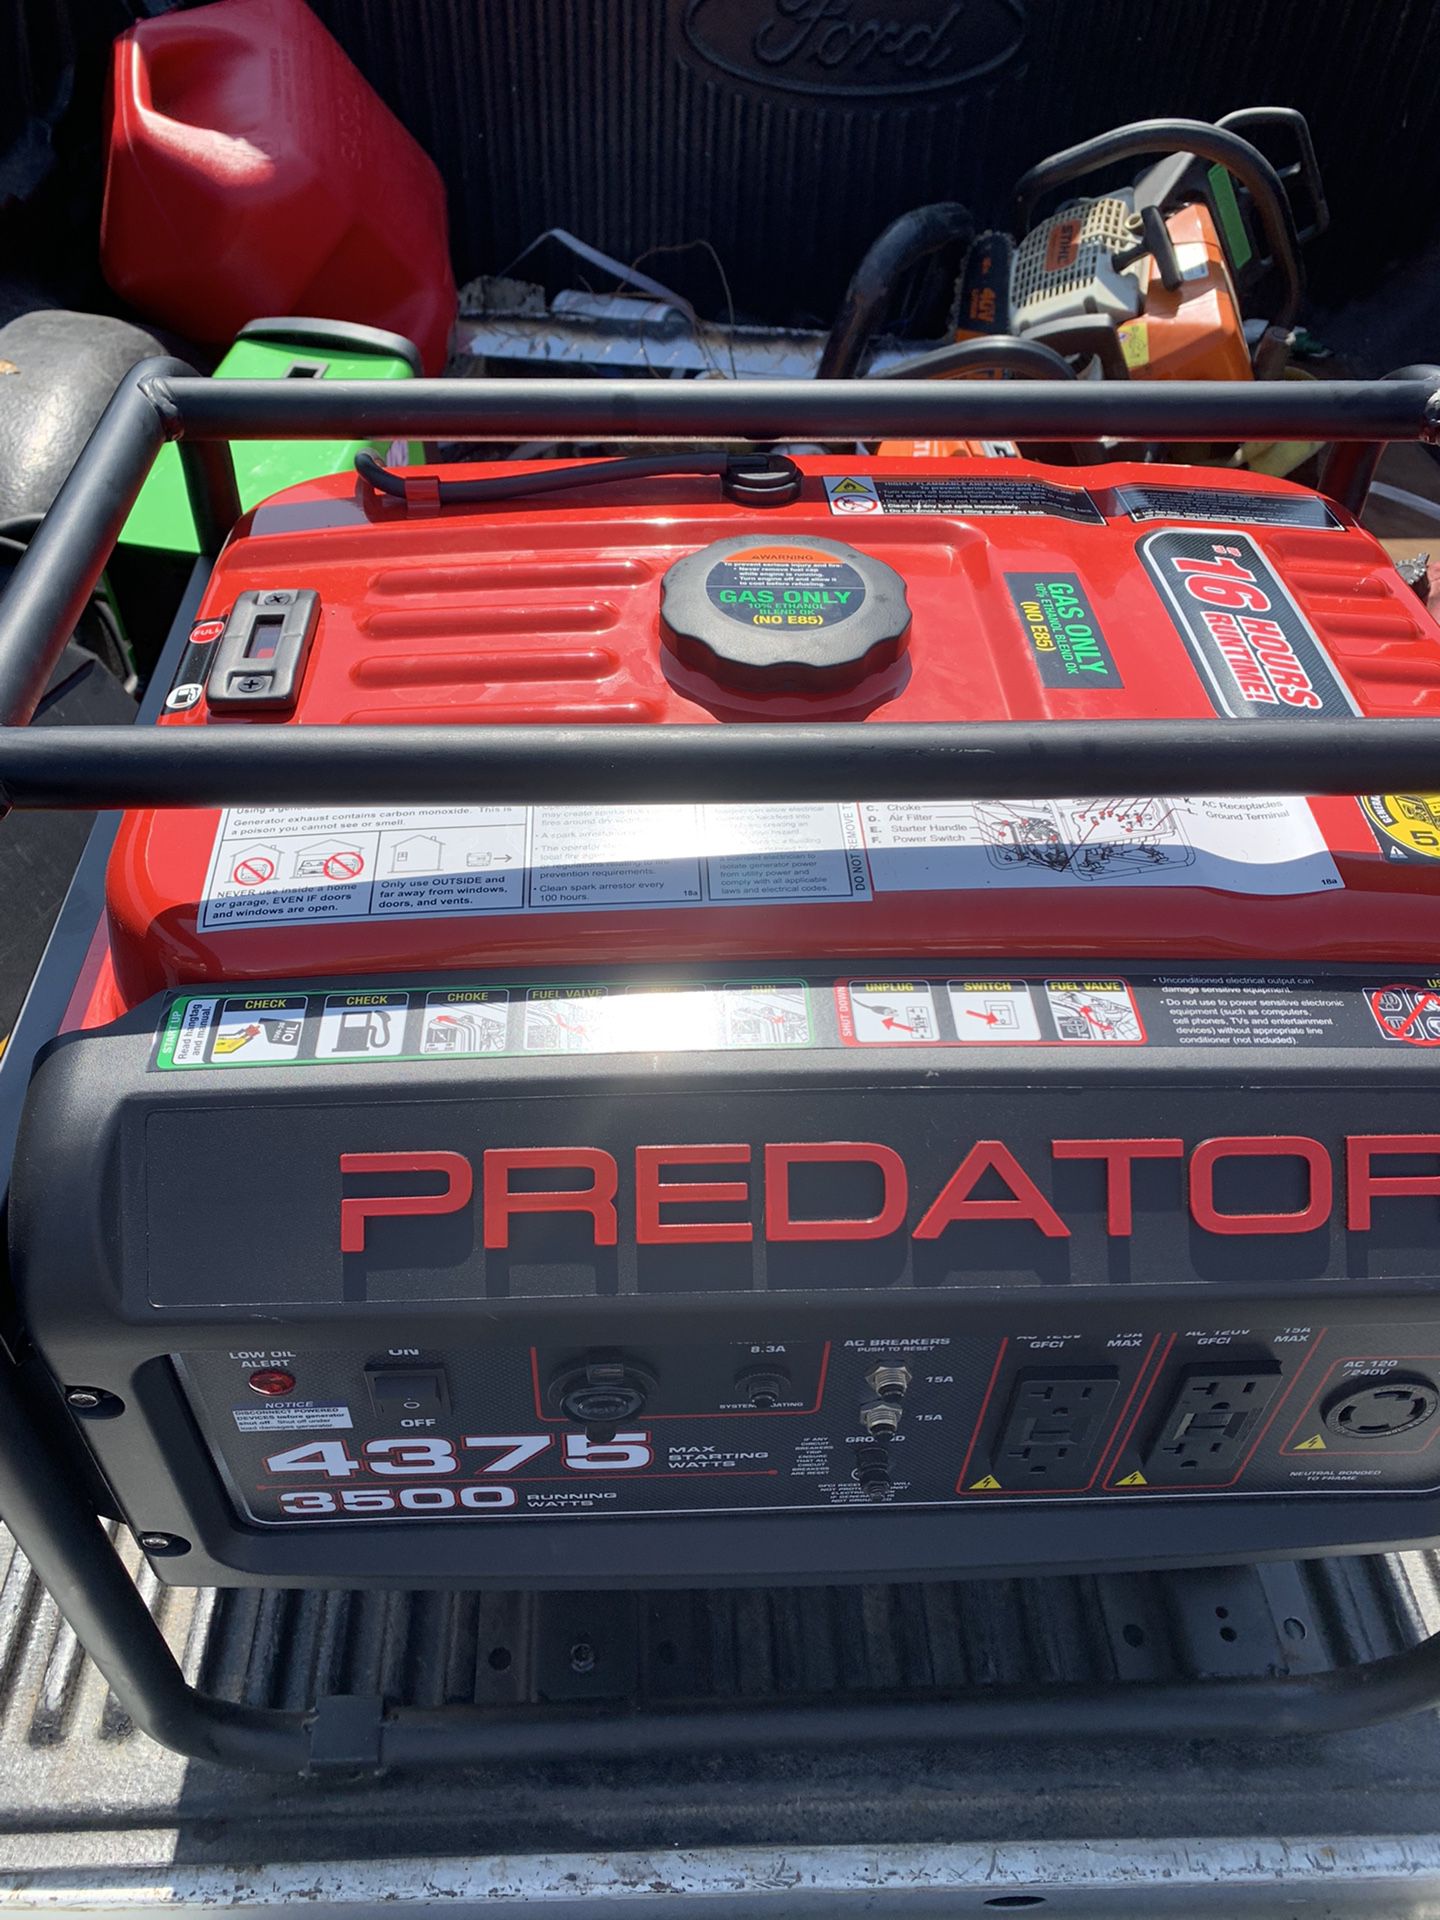 Predator Generator